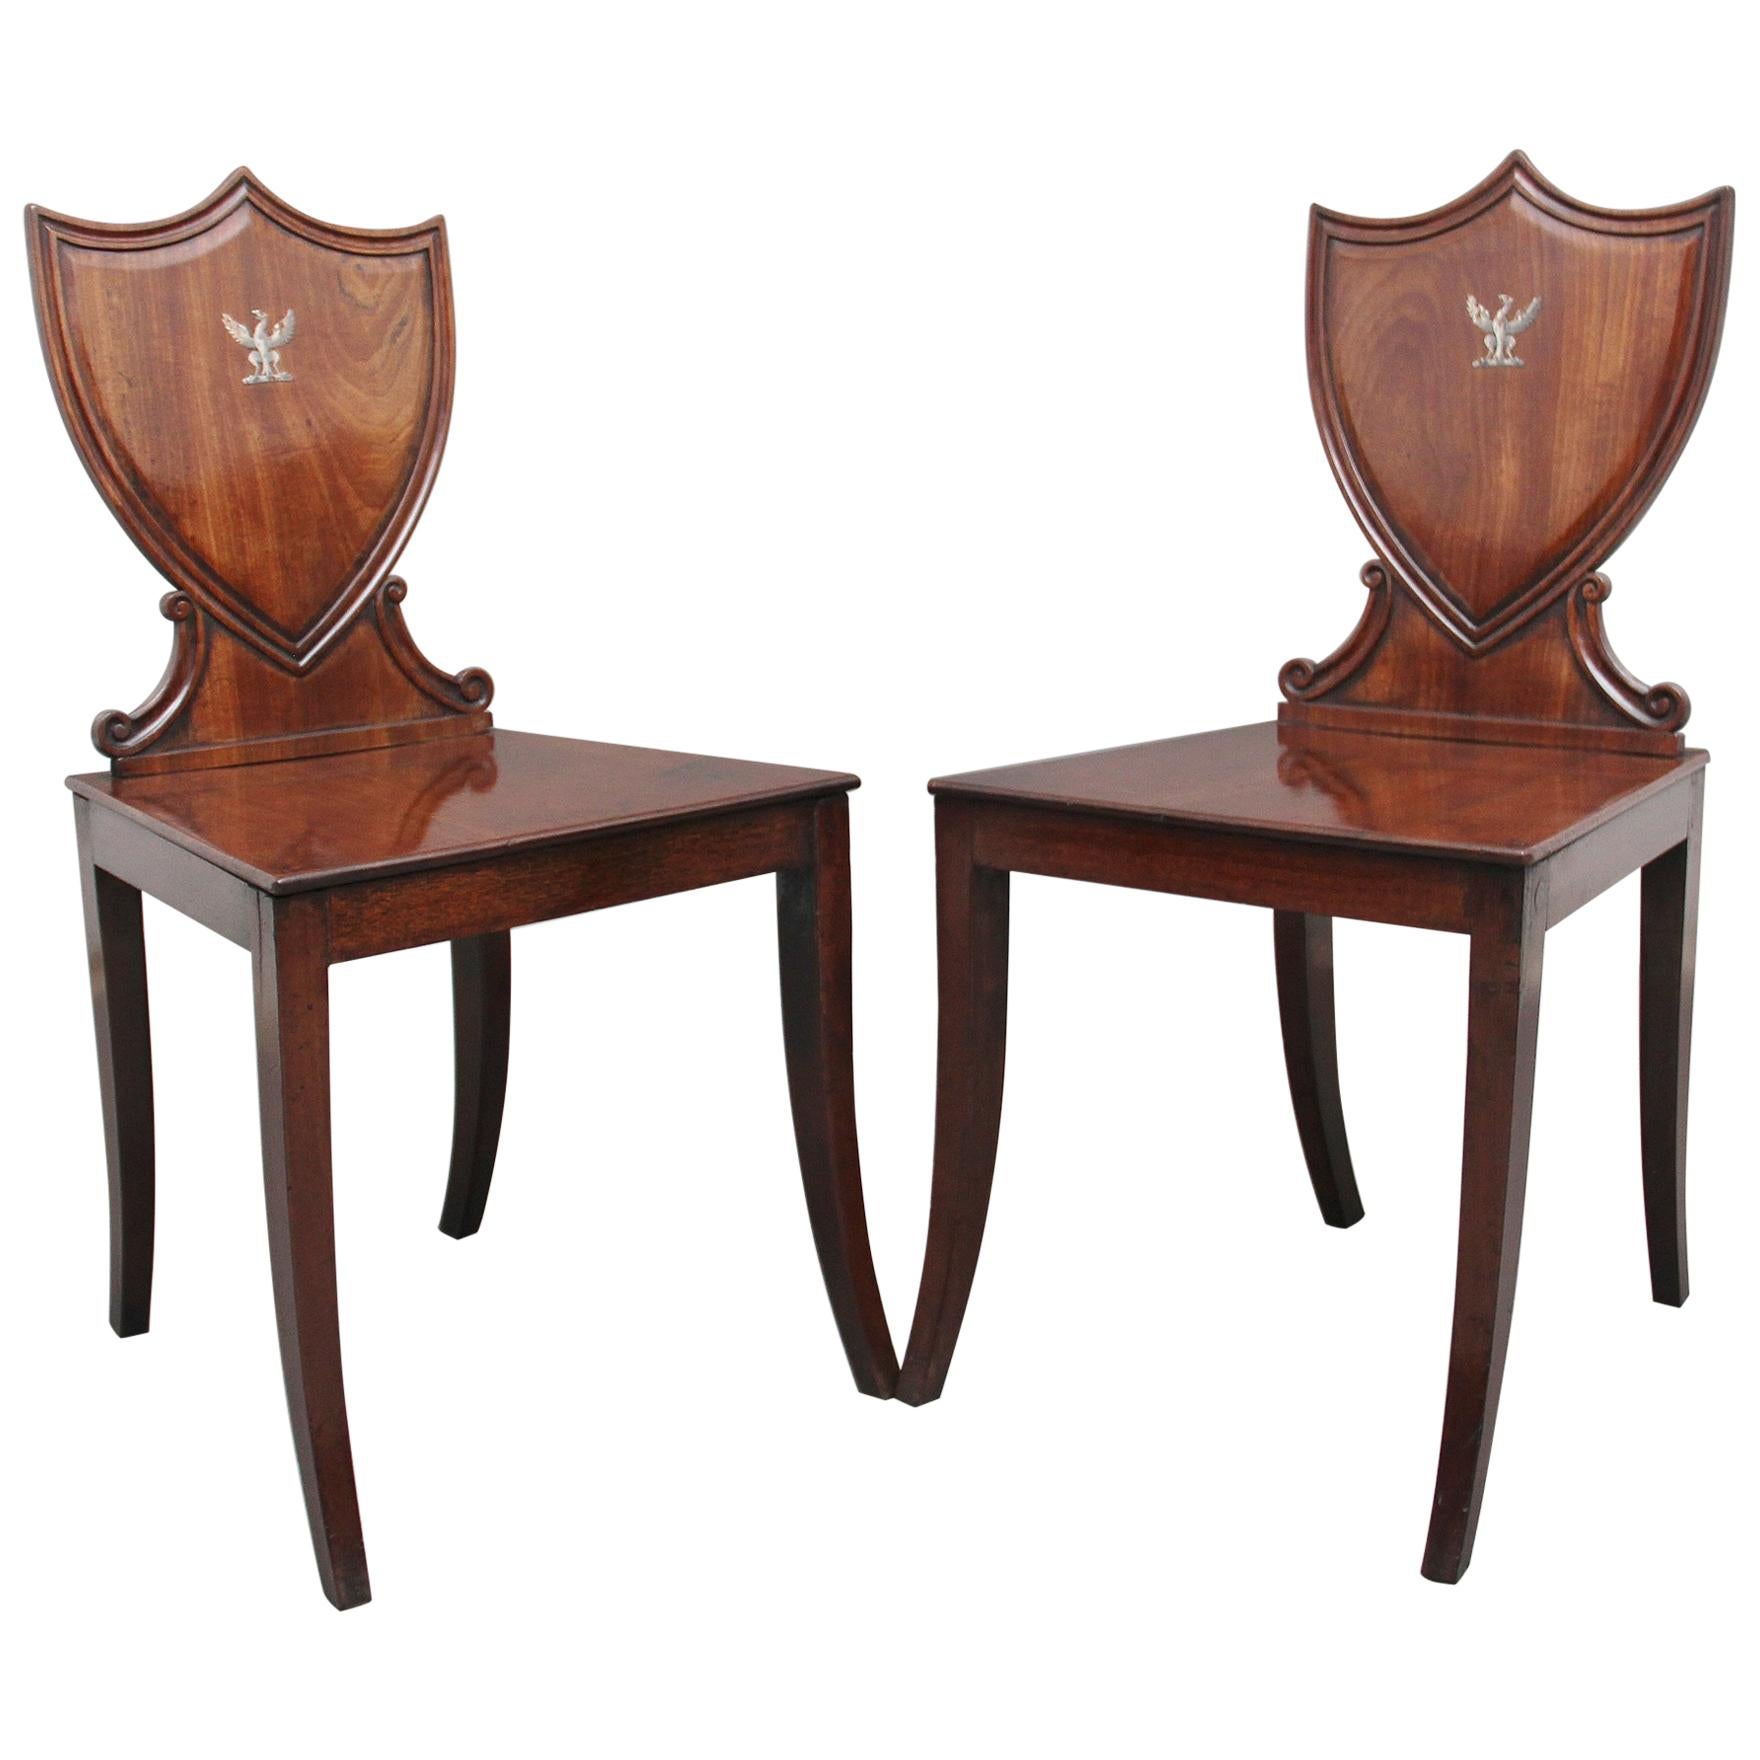 Pair of Early 19th Century Mahogany Hall Chairs